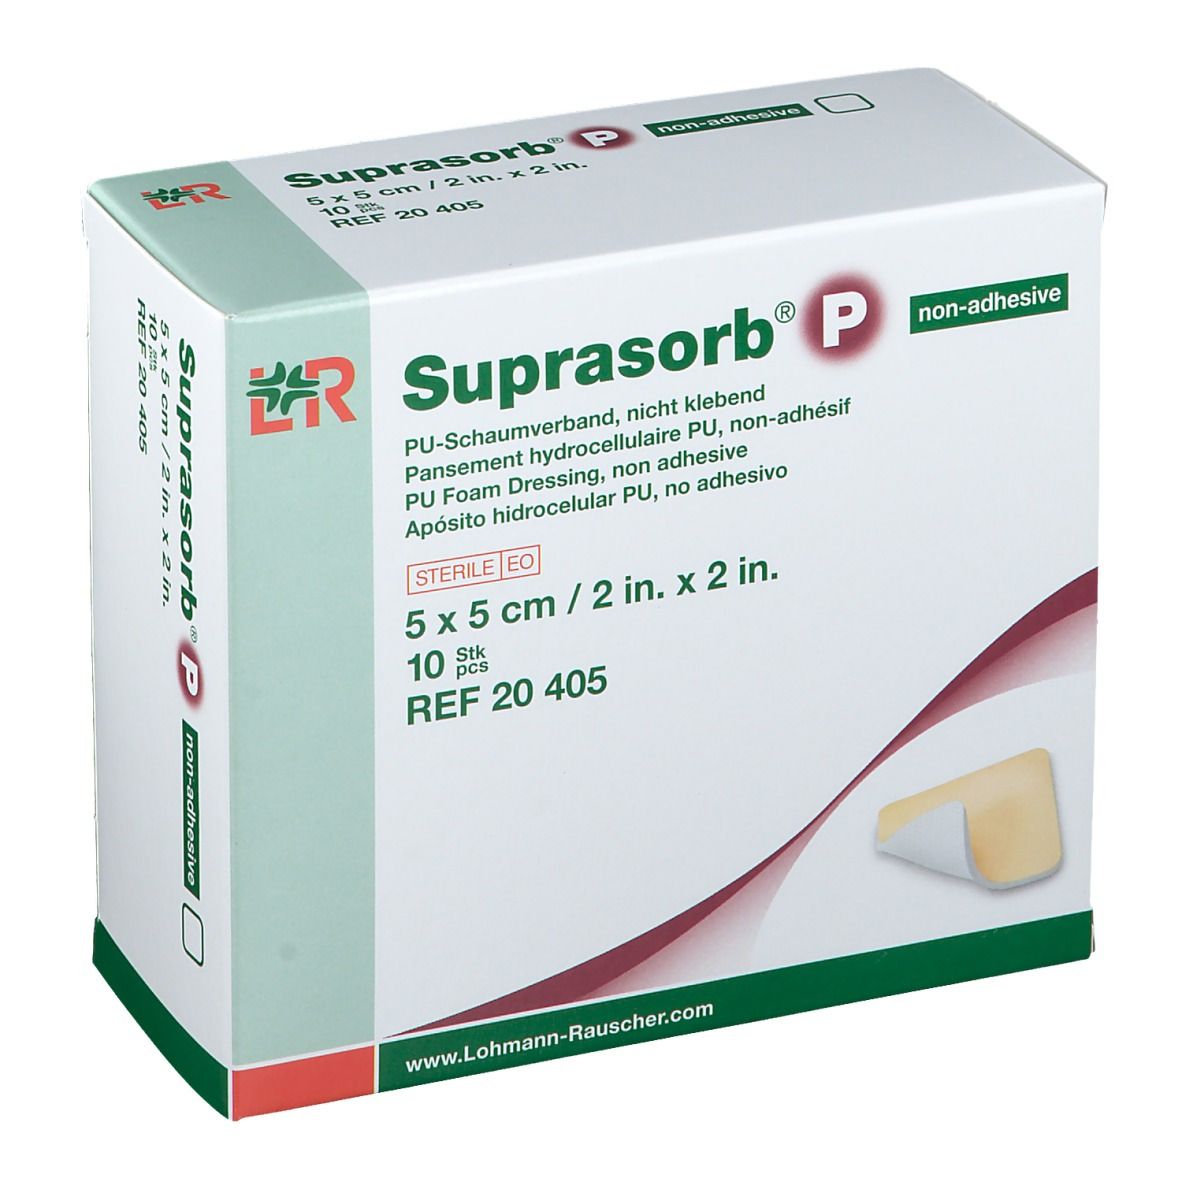 Suprasorb® P non-adhesive 5 x 5 cm